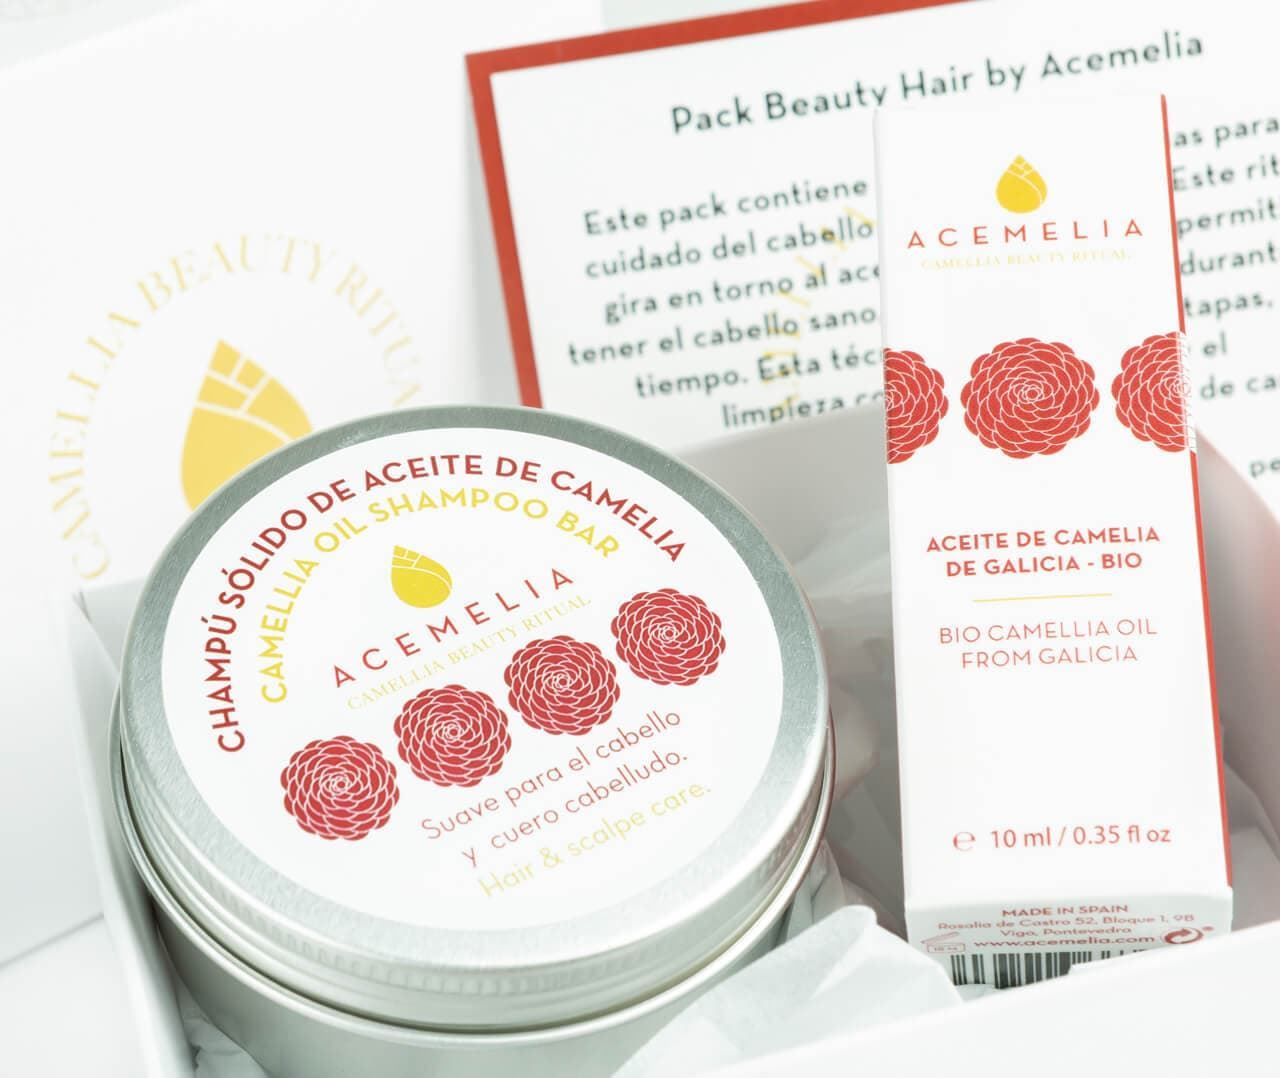 Pack Beauty Hair Acemelia - Imagen 2